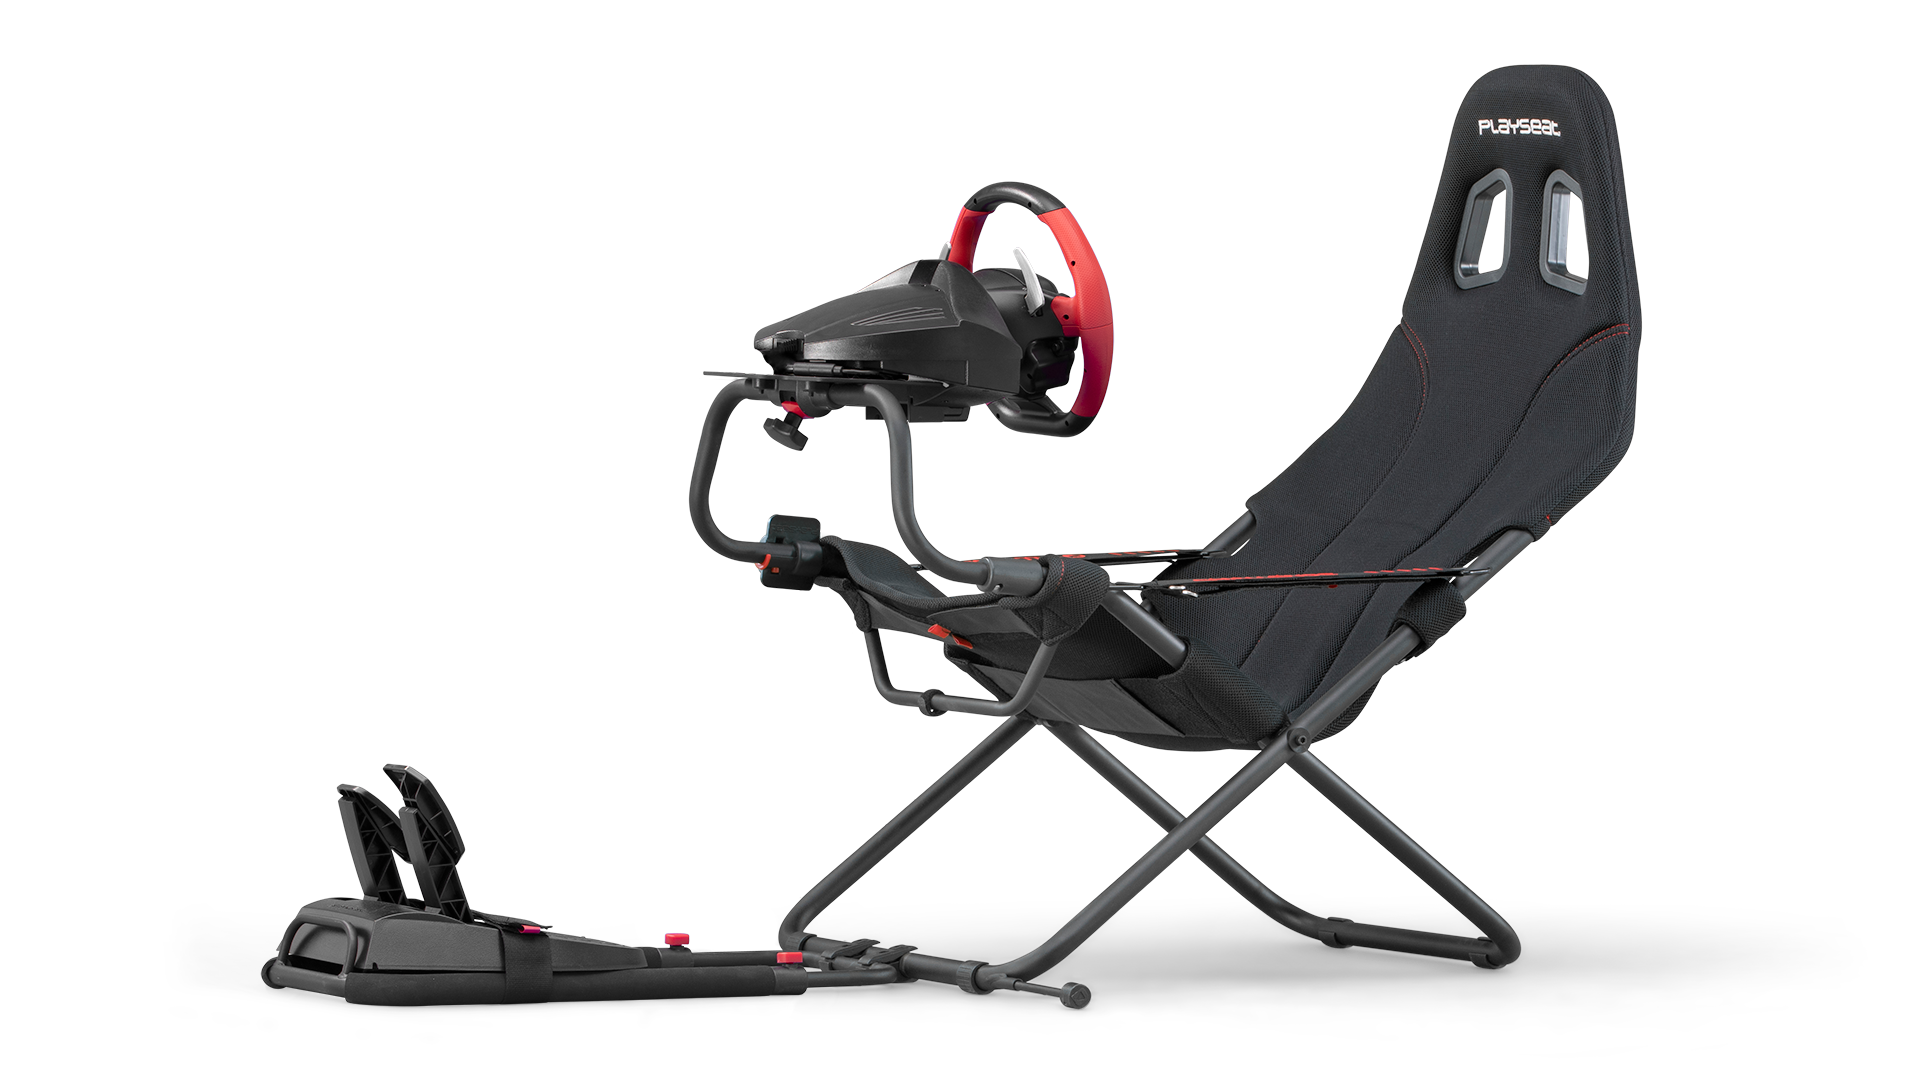 Playseat Challenge ActiFit Racing Chair in Black